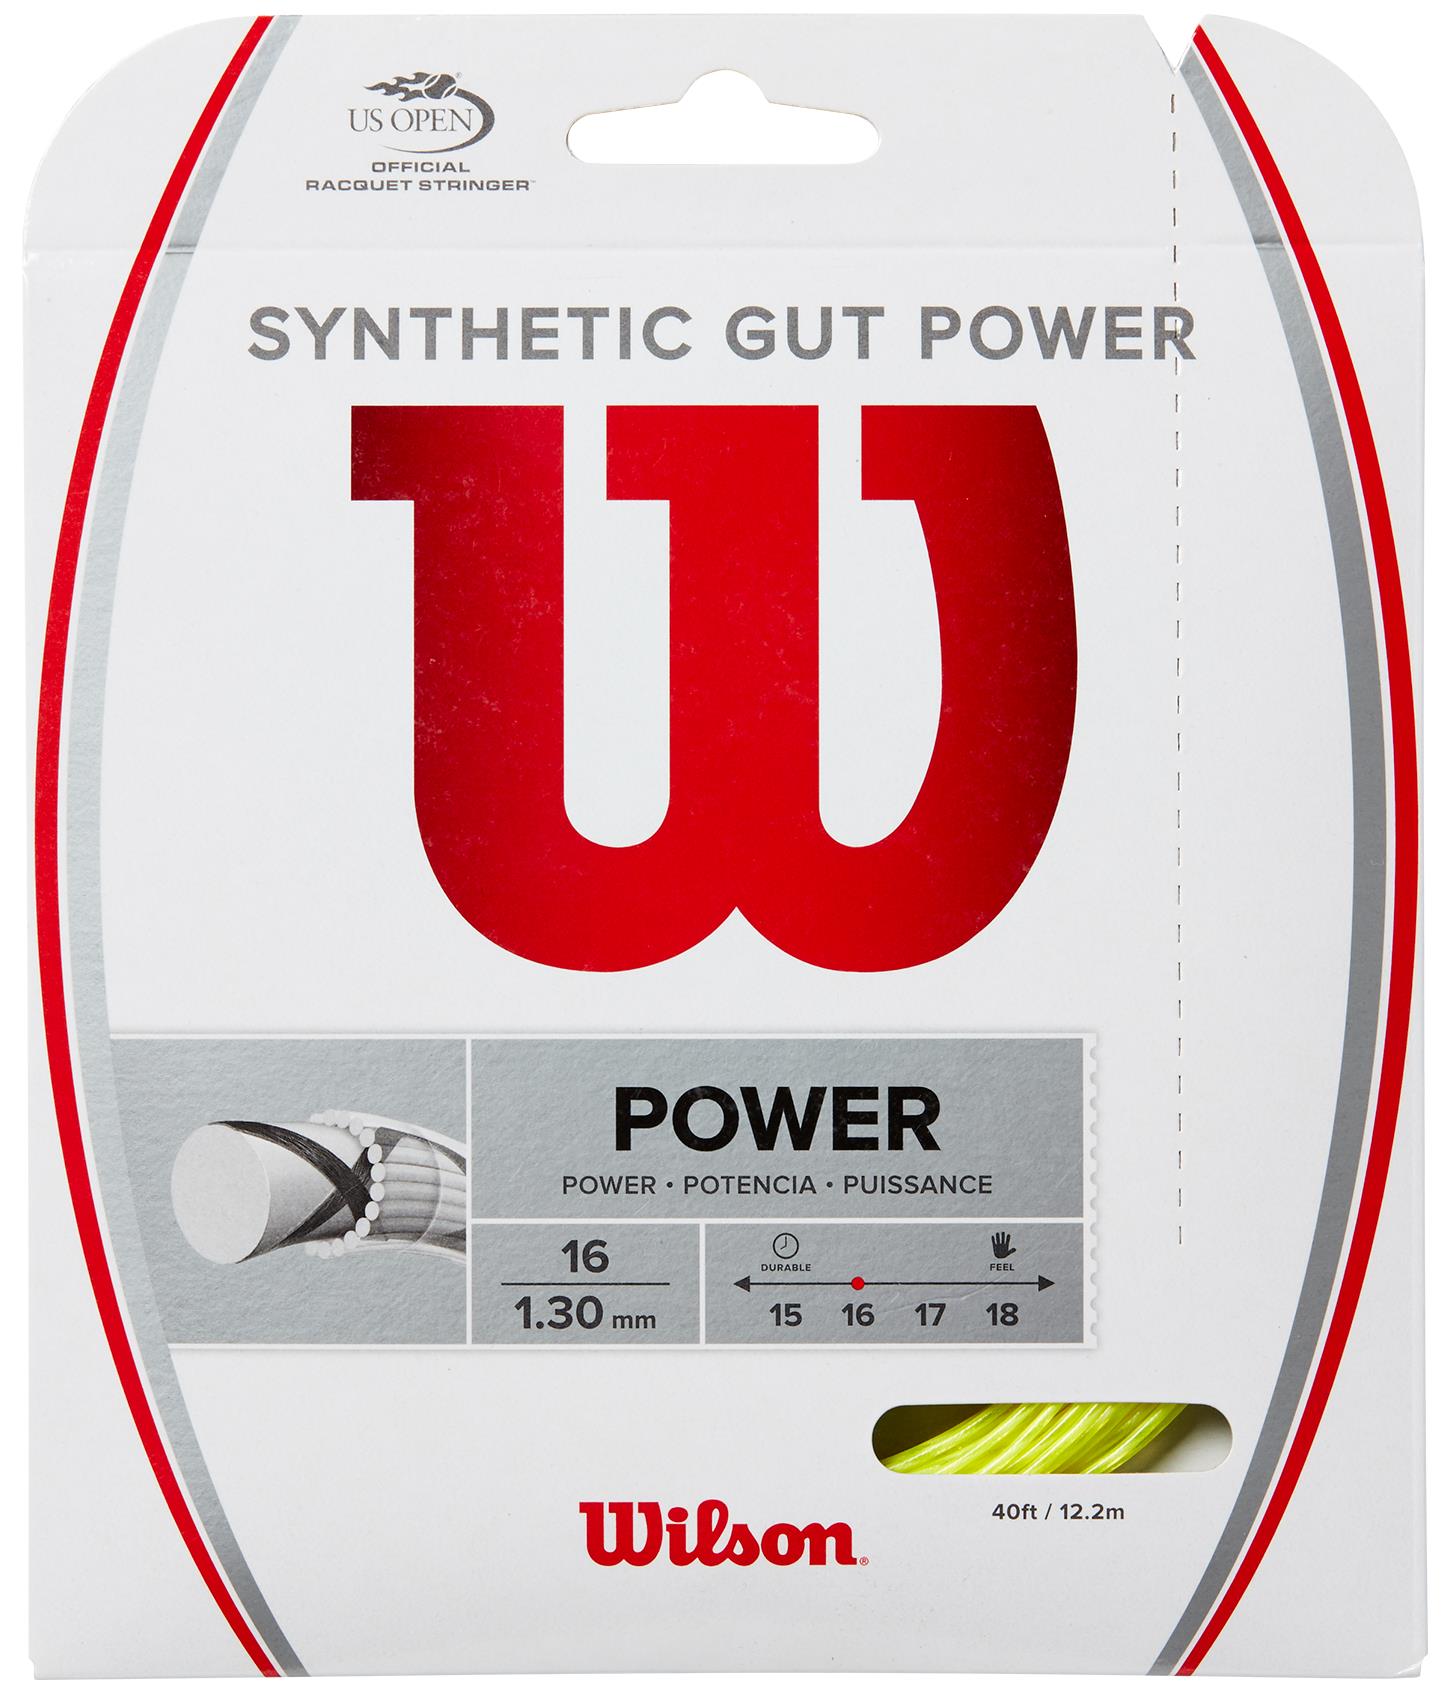 Wilson Synthetic Gut Power 16g Yellow Tennis String (Set)